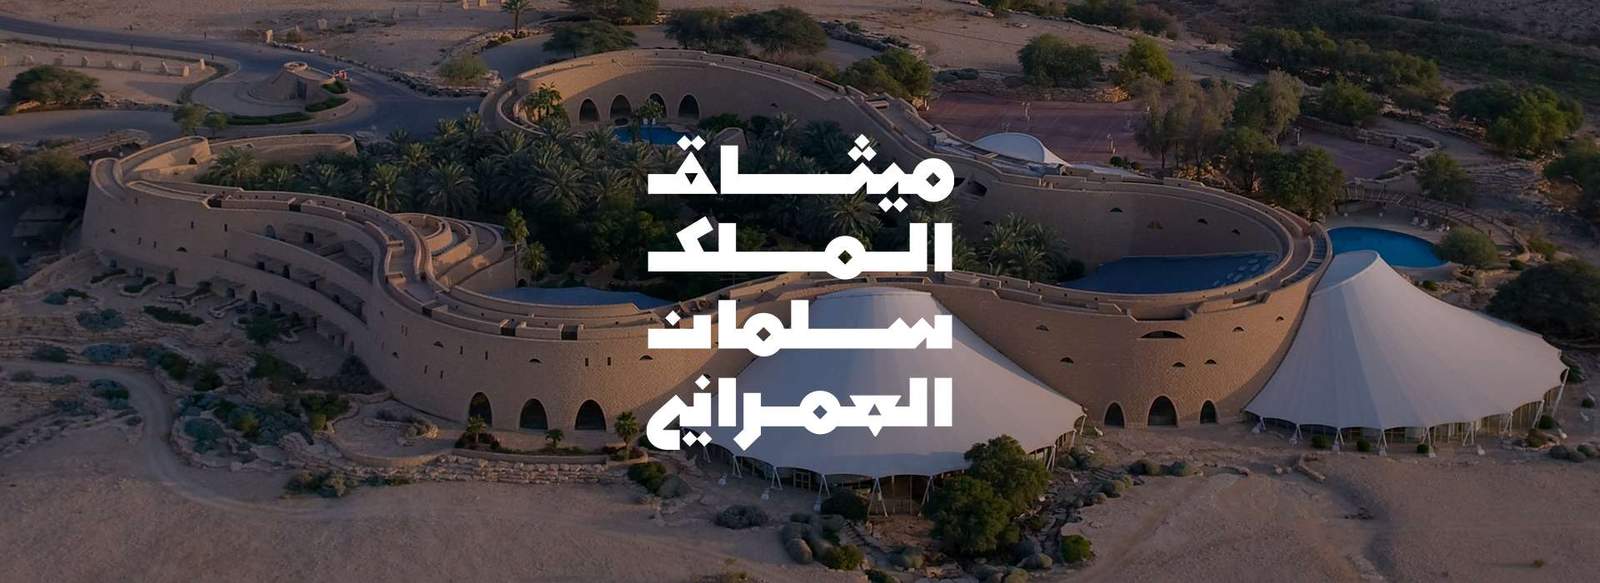 King Salman Charter for Architecture and Urbanism | ميثاق الملك سلمان العمراني